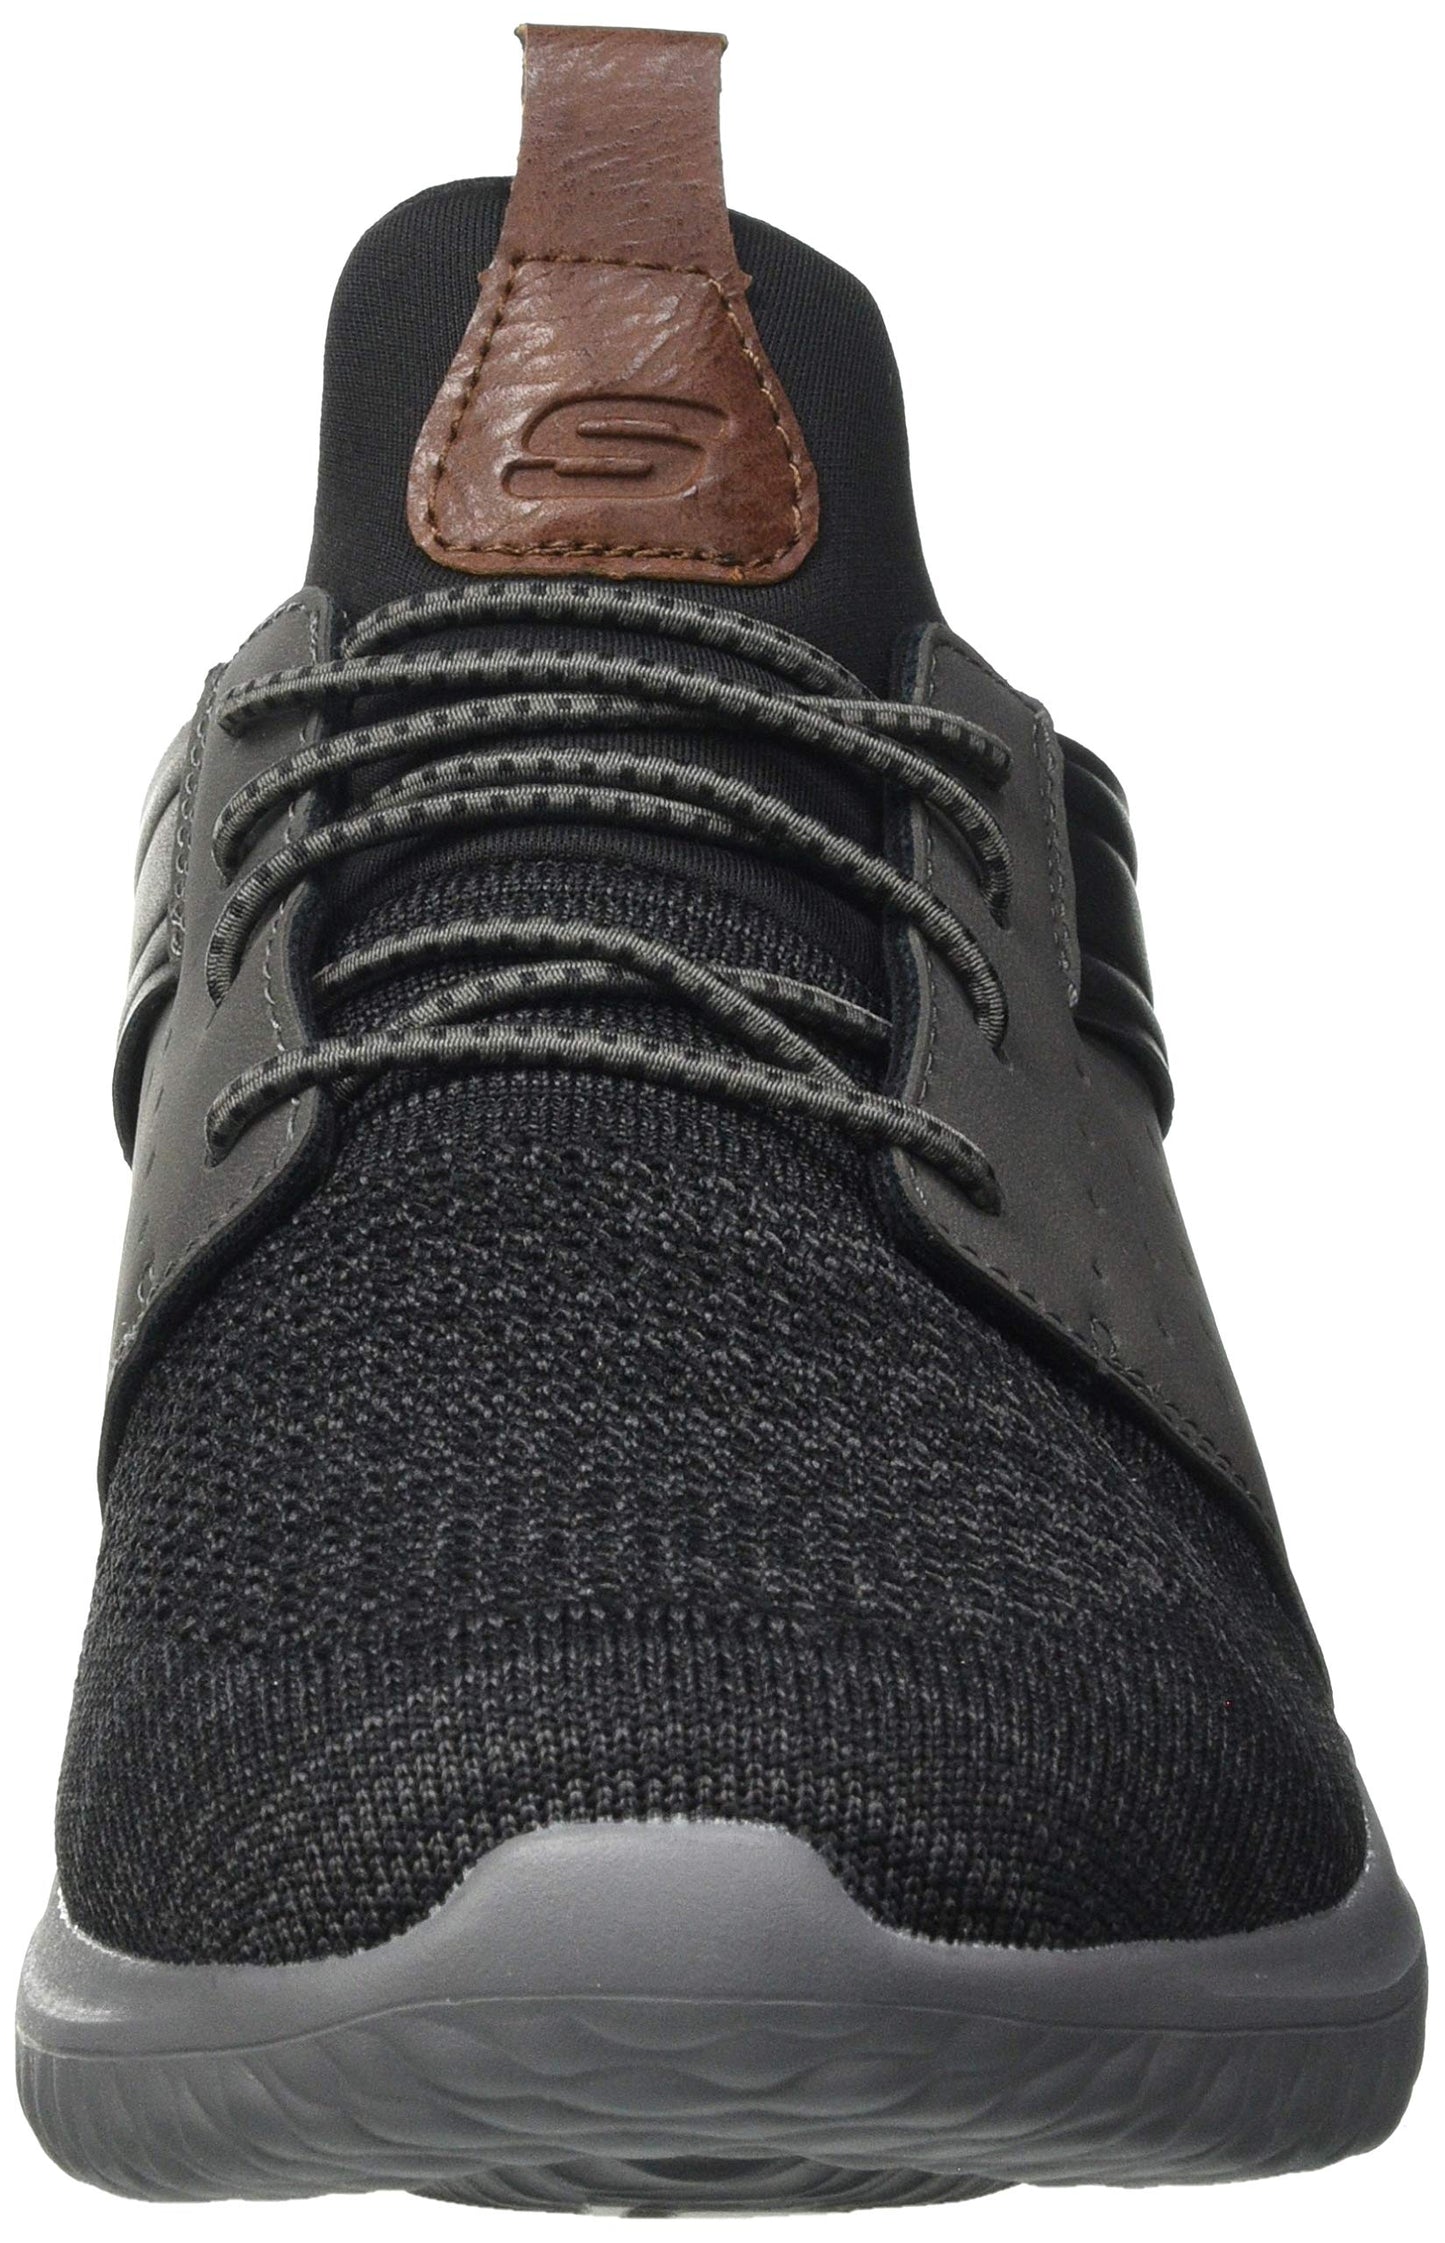 Skechers Men's Delson 3.0 Cicada Sneaker, Black/Grey, 9